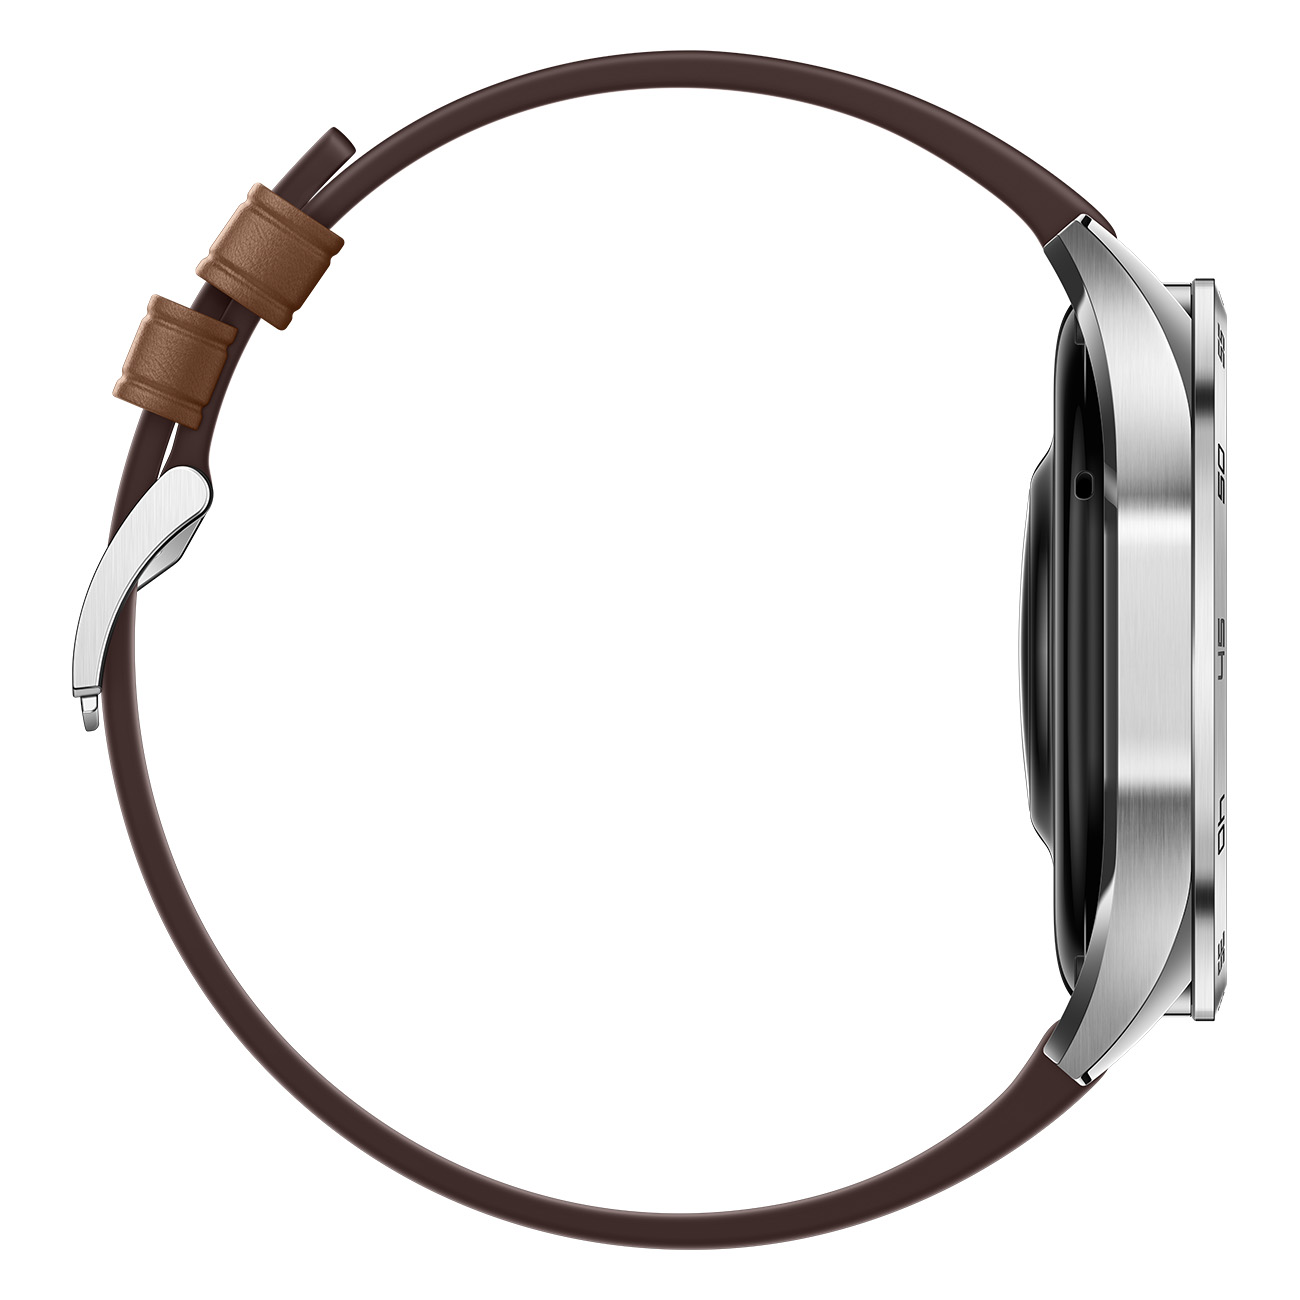 braun HUAWEI GT4 Smartwatch Watch Leder,